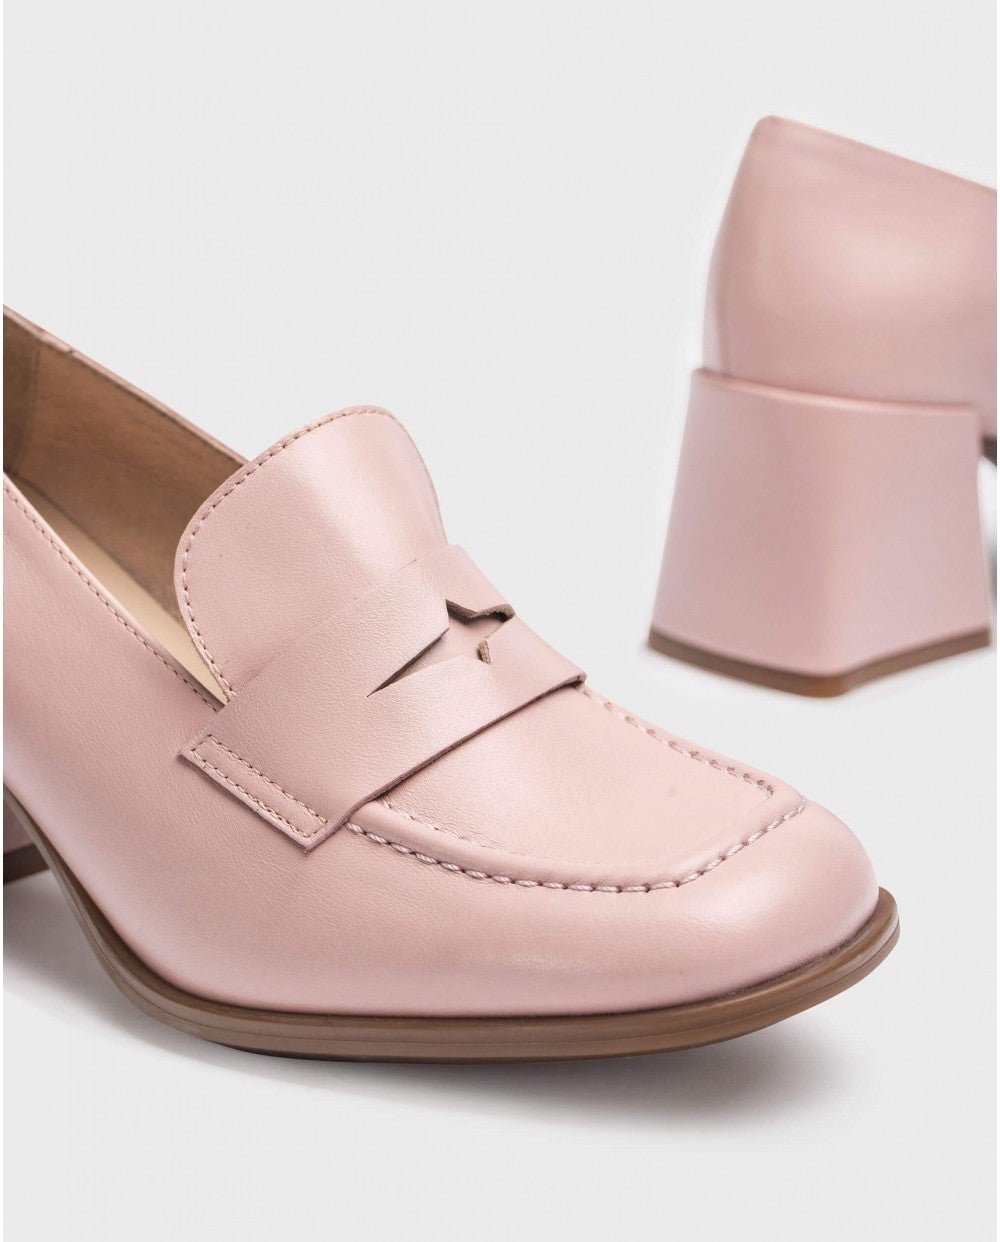 'Celine' women's pump - Pink - Chaplinshoes'Celine' women's pump - PinkWonders